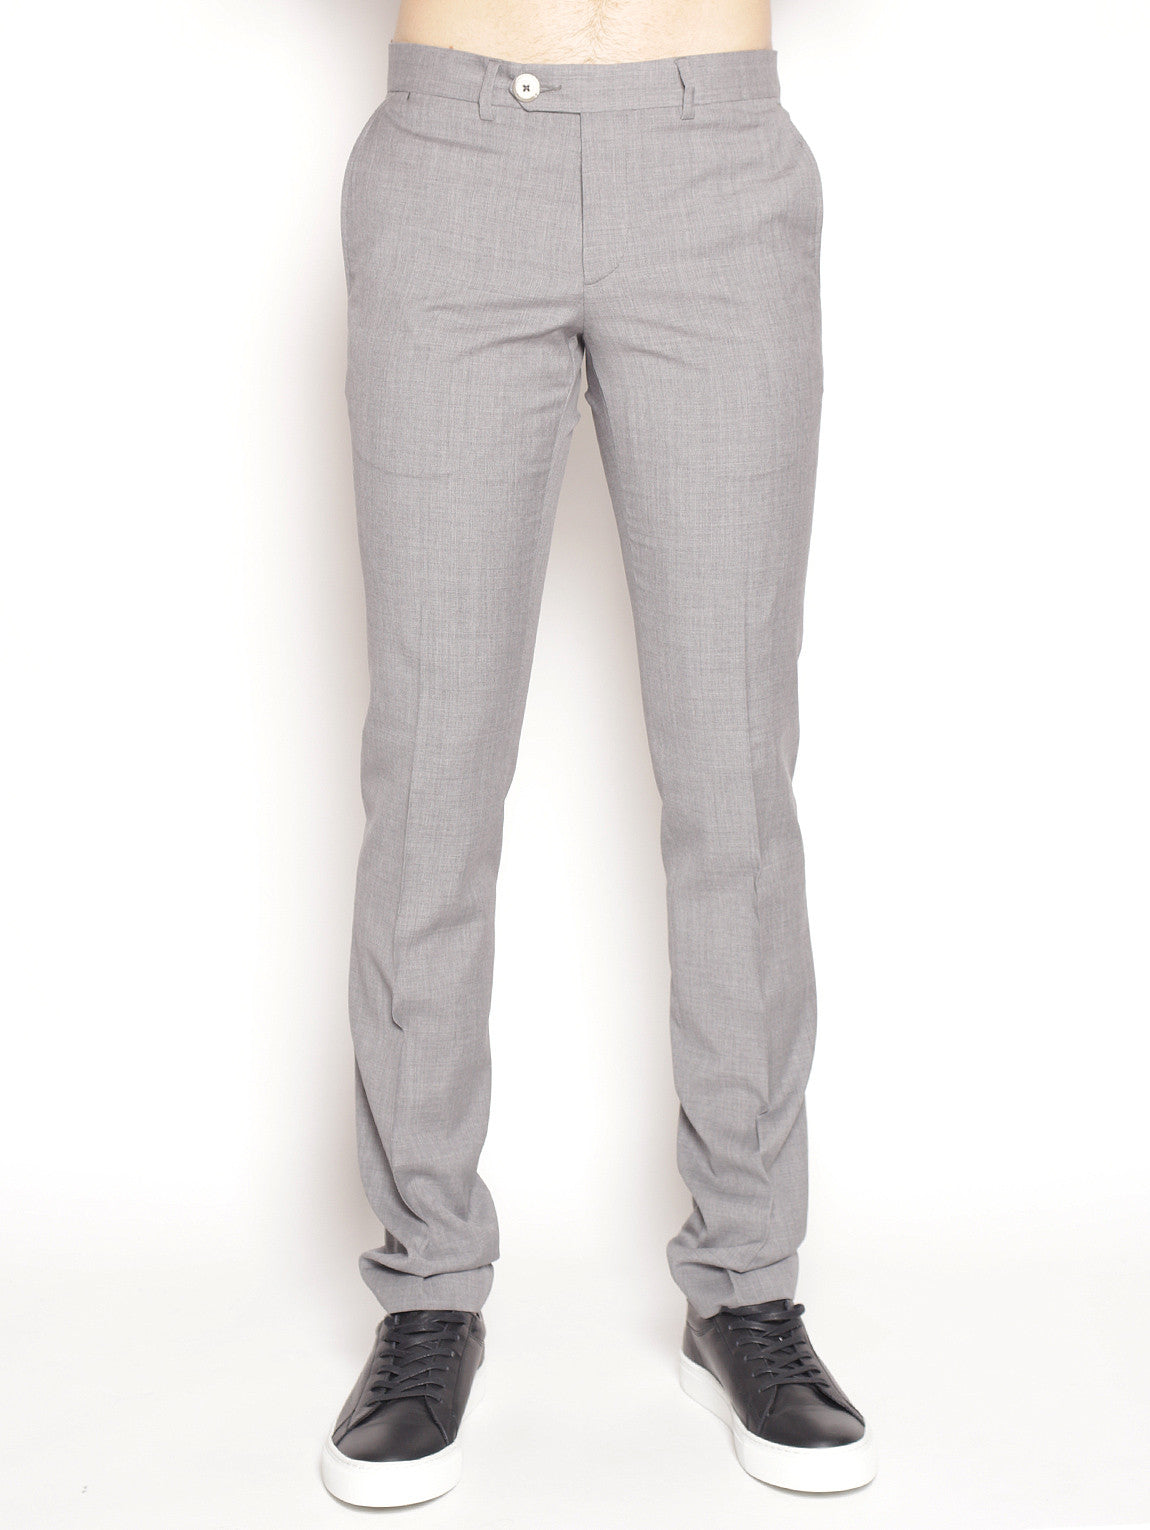 MANUEL RITZ-Pantalone elegante slim fit 2232P1858 170000 Grigio-TRYME Shop